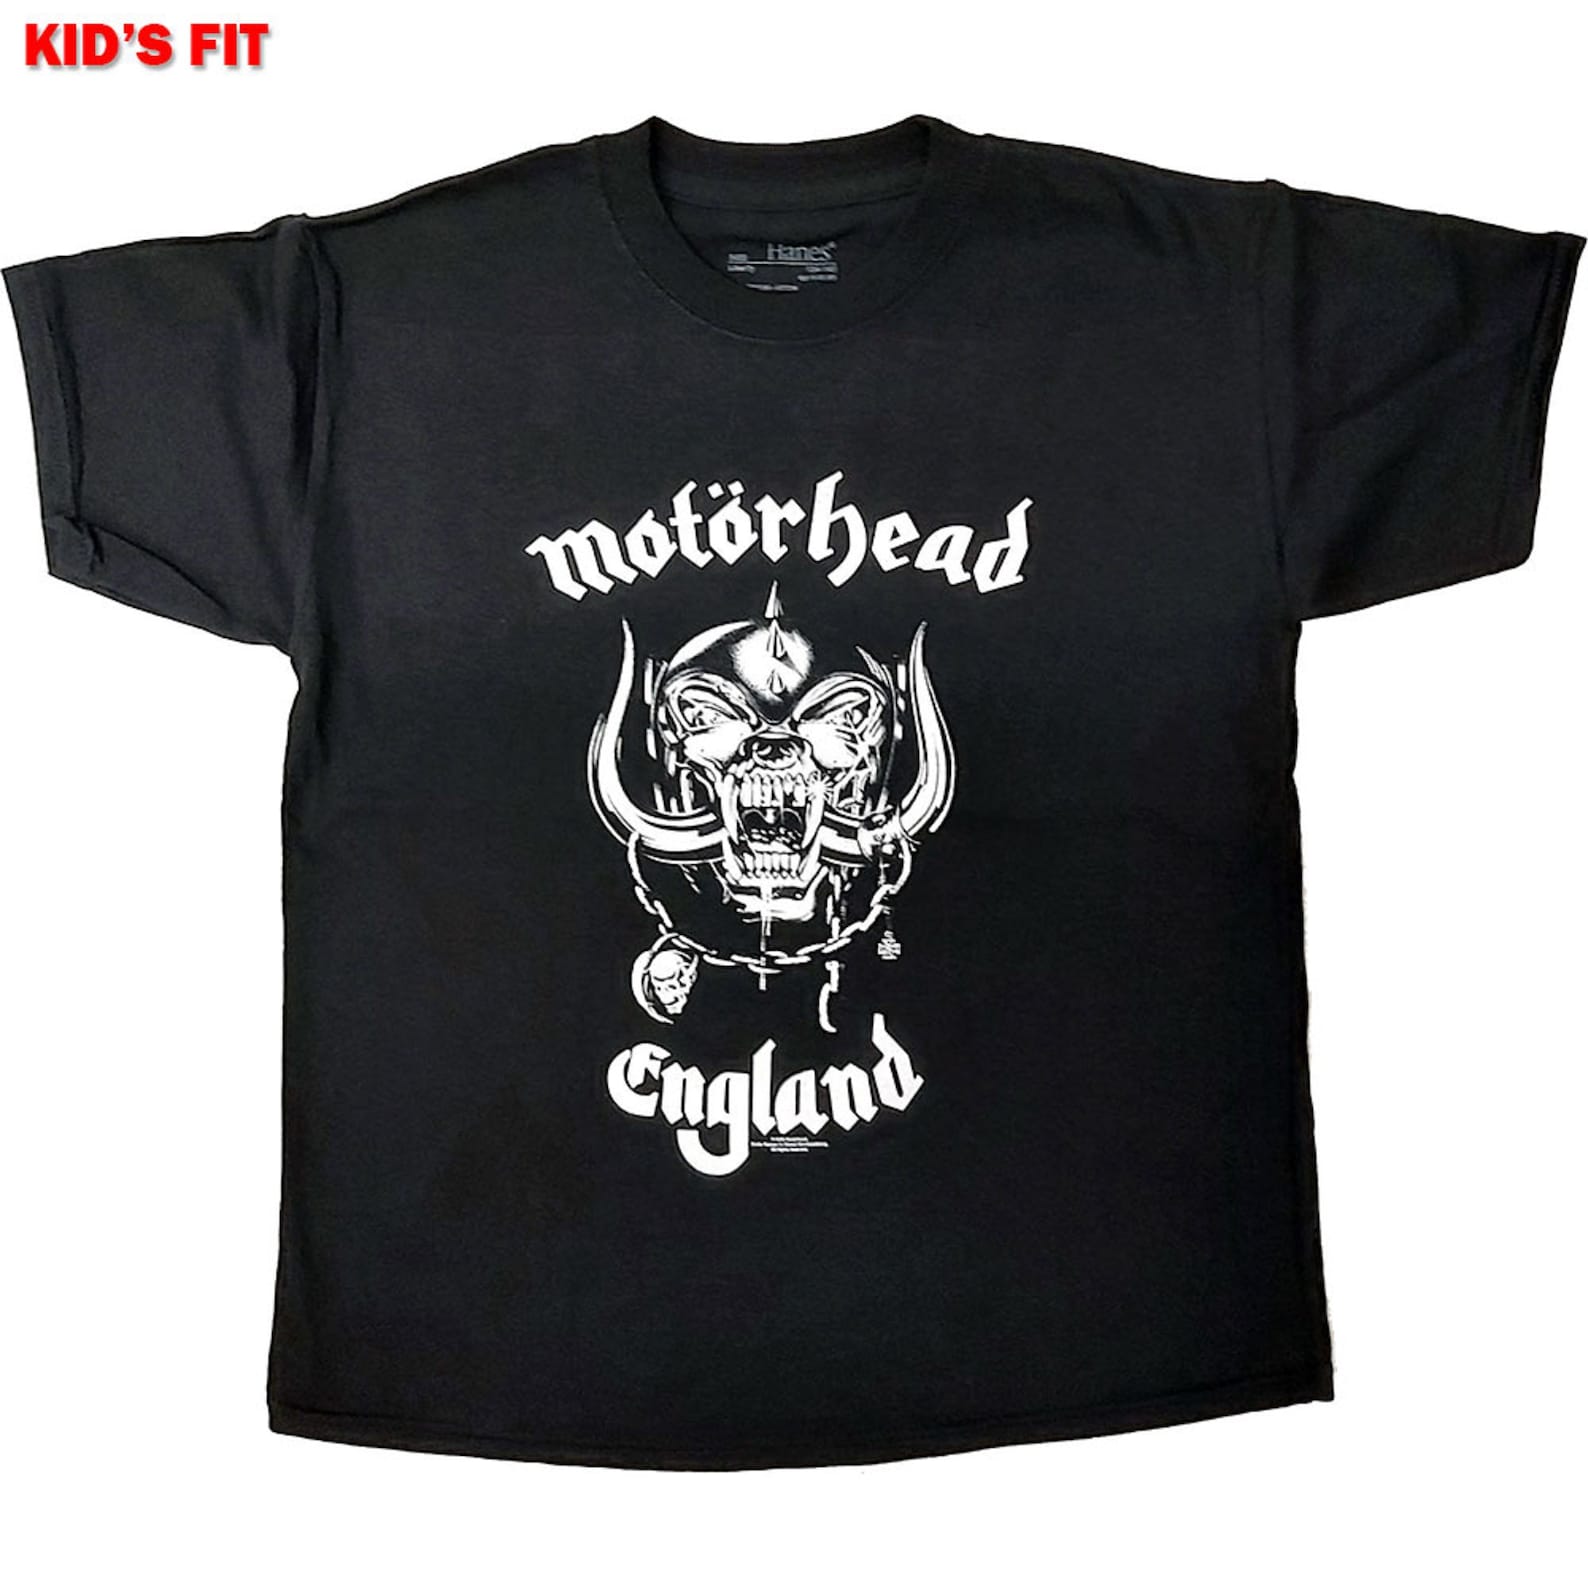 Kids Fit Motorhead Classic Rock T Shirt Official Merchandise | Etsy